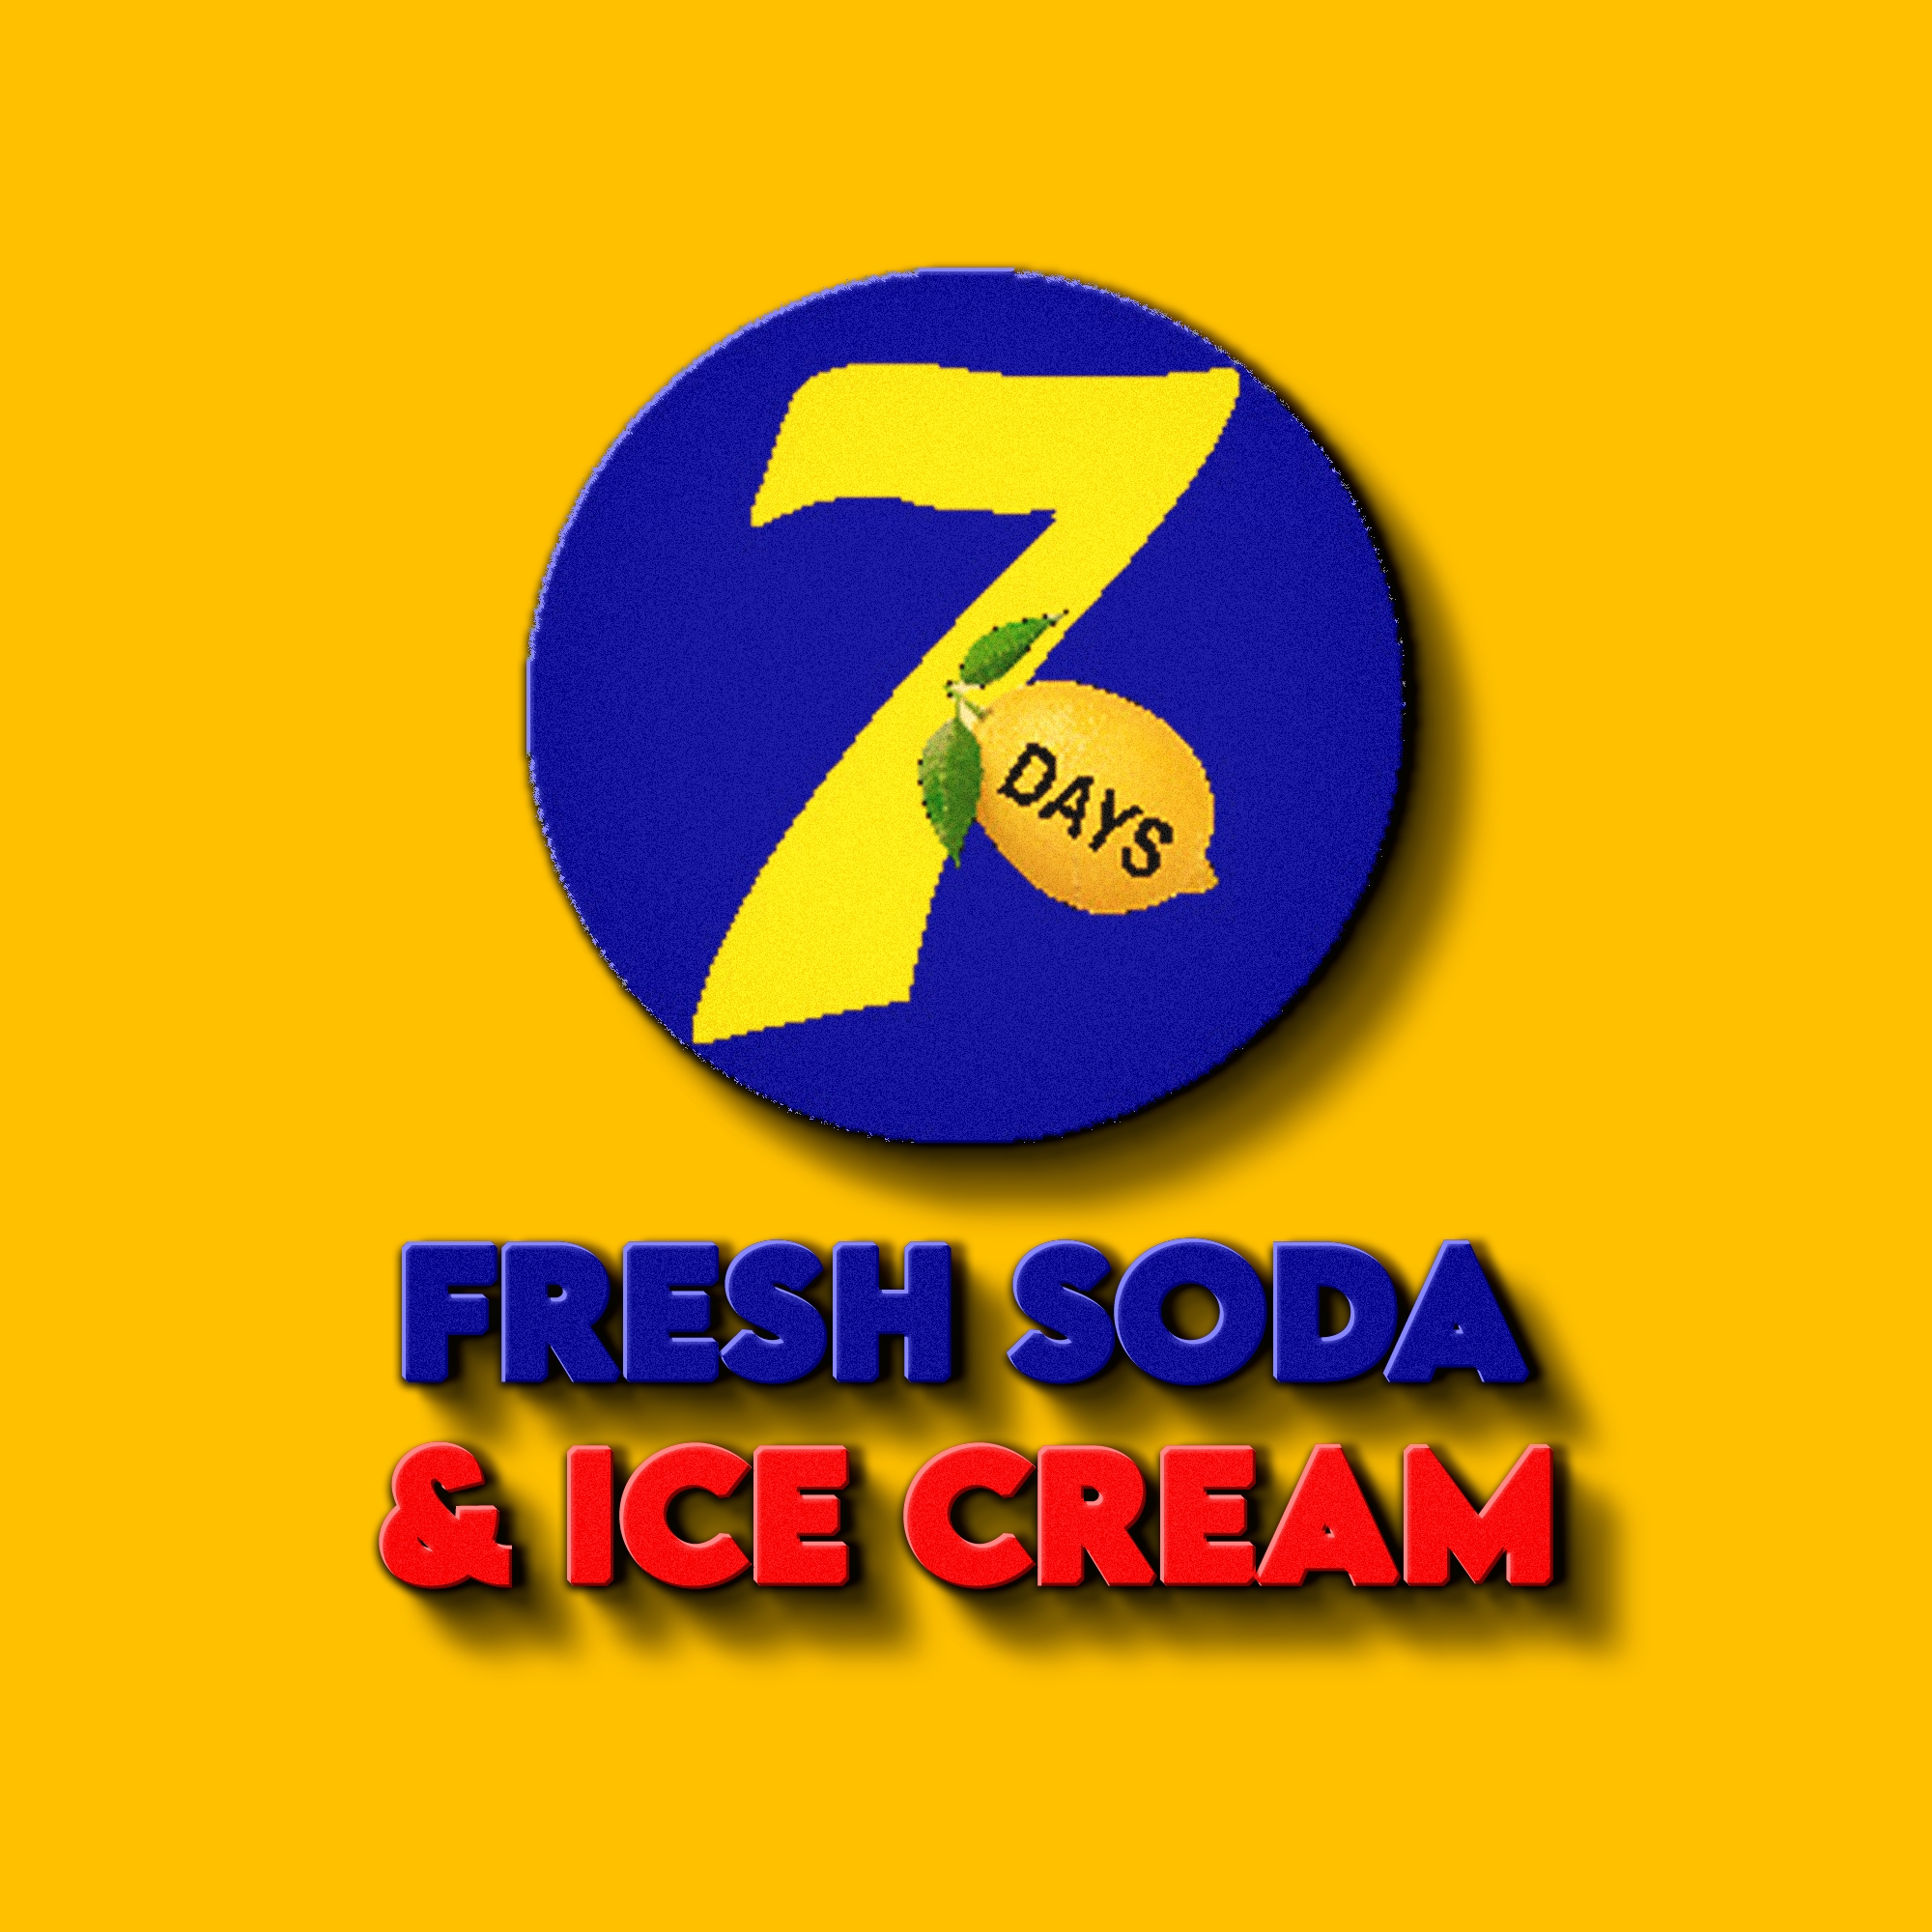 7 Days Fresh Soda And Ice Cream